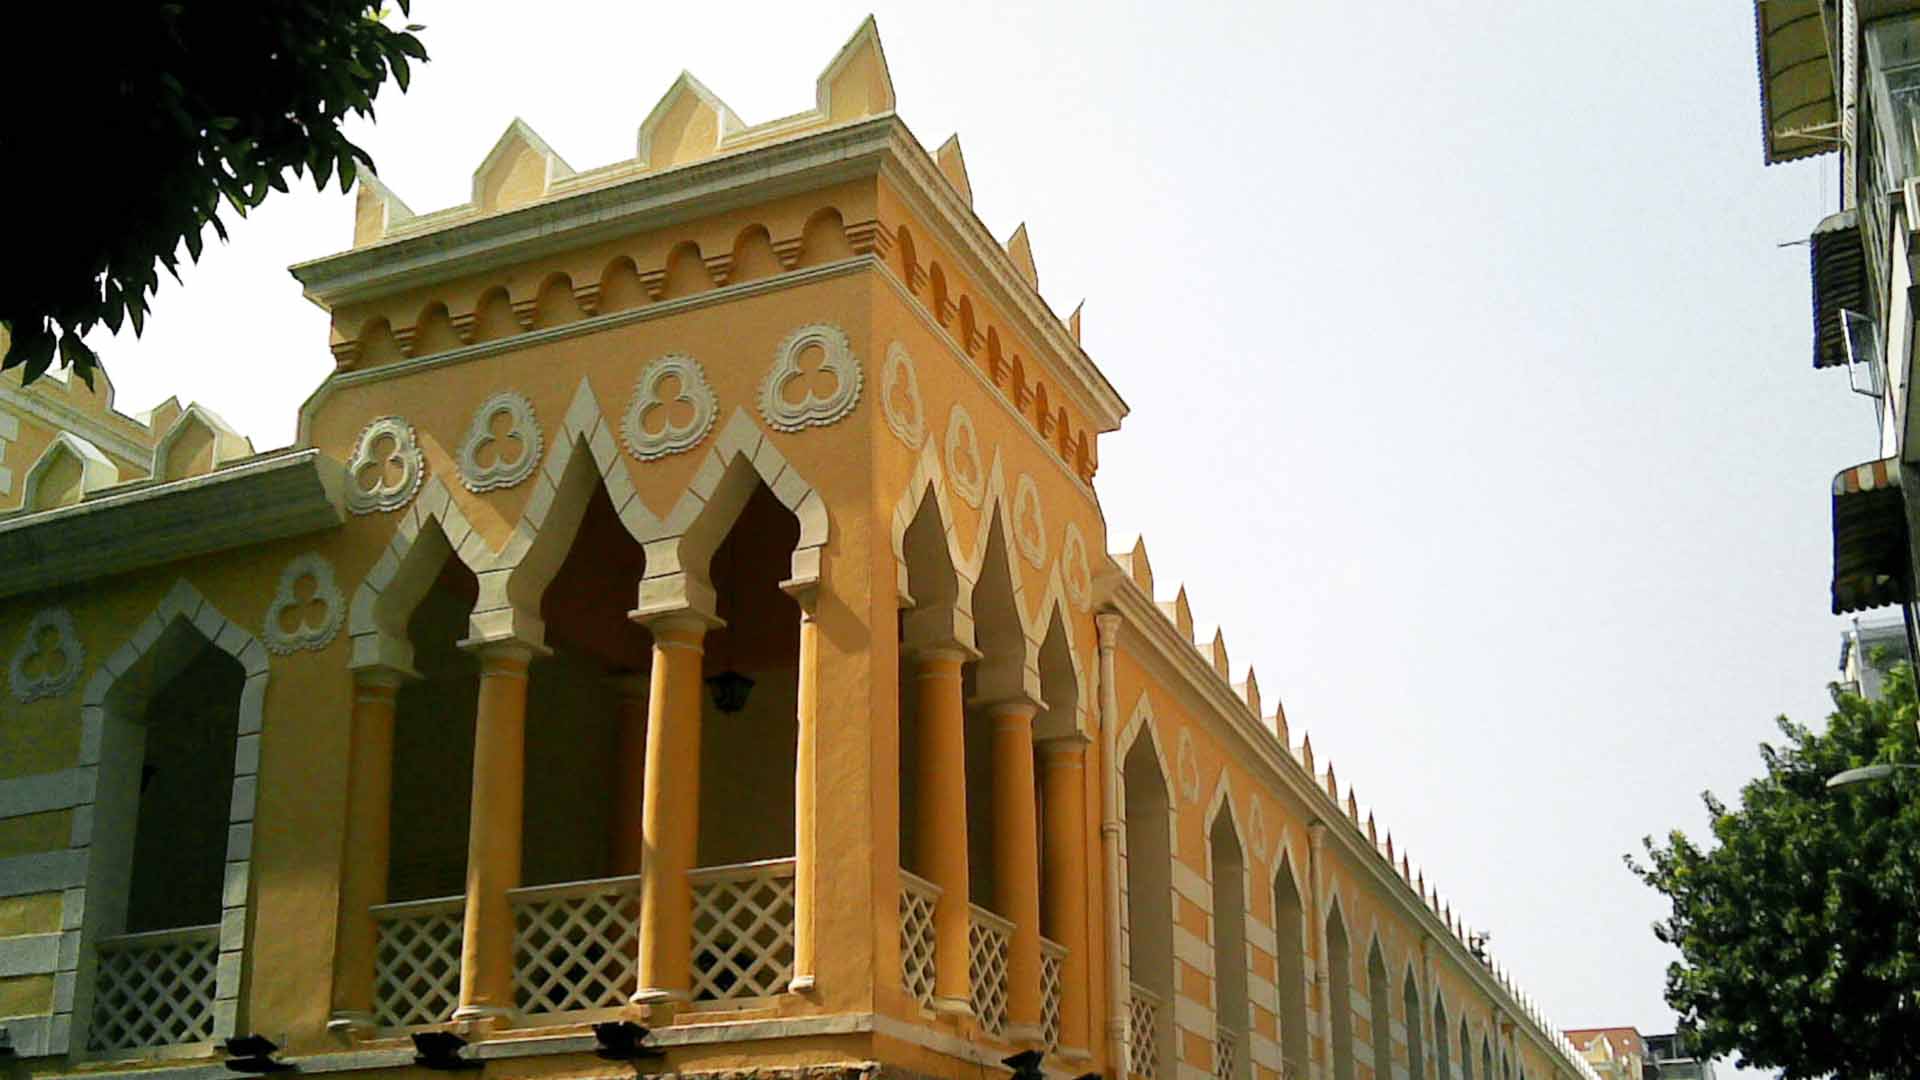 Renovation of the Moorish Barracks in Macau